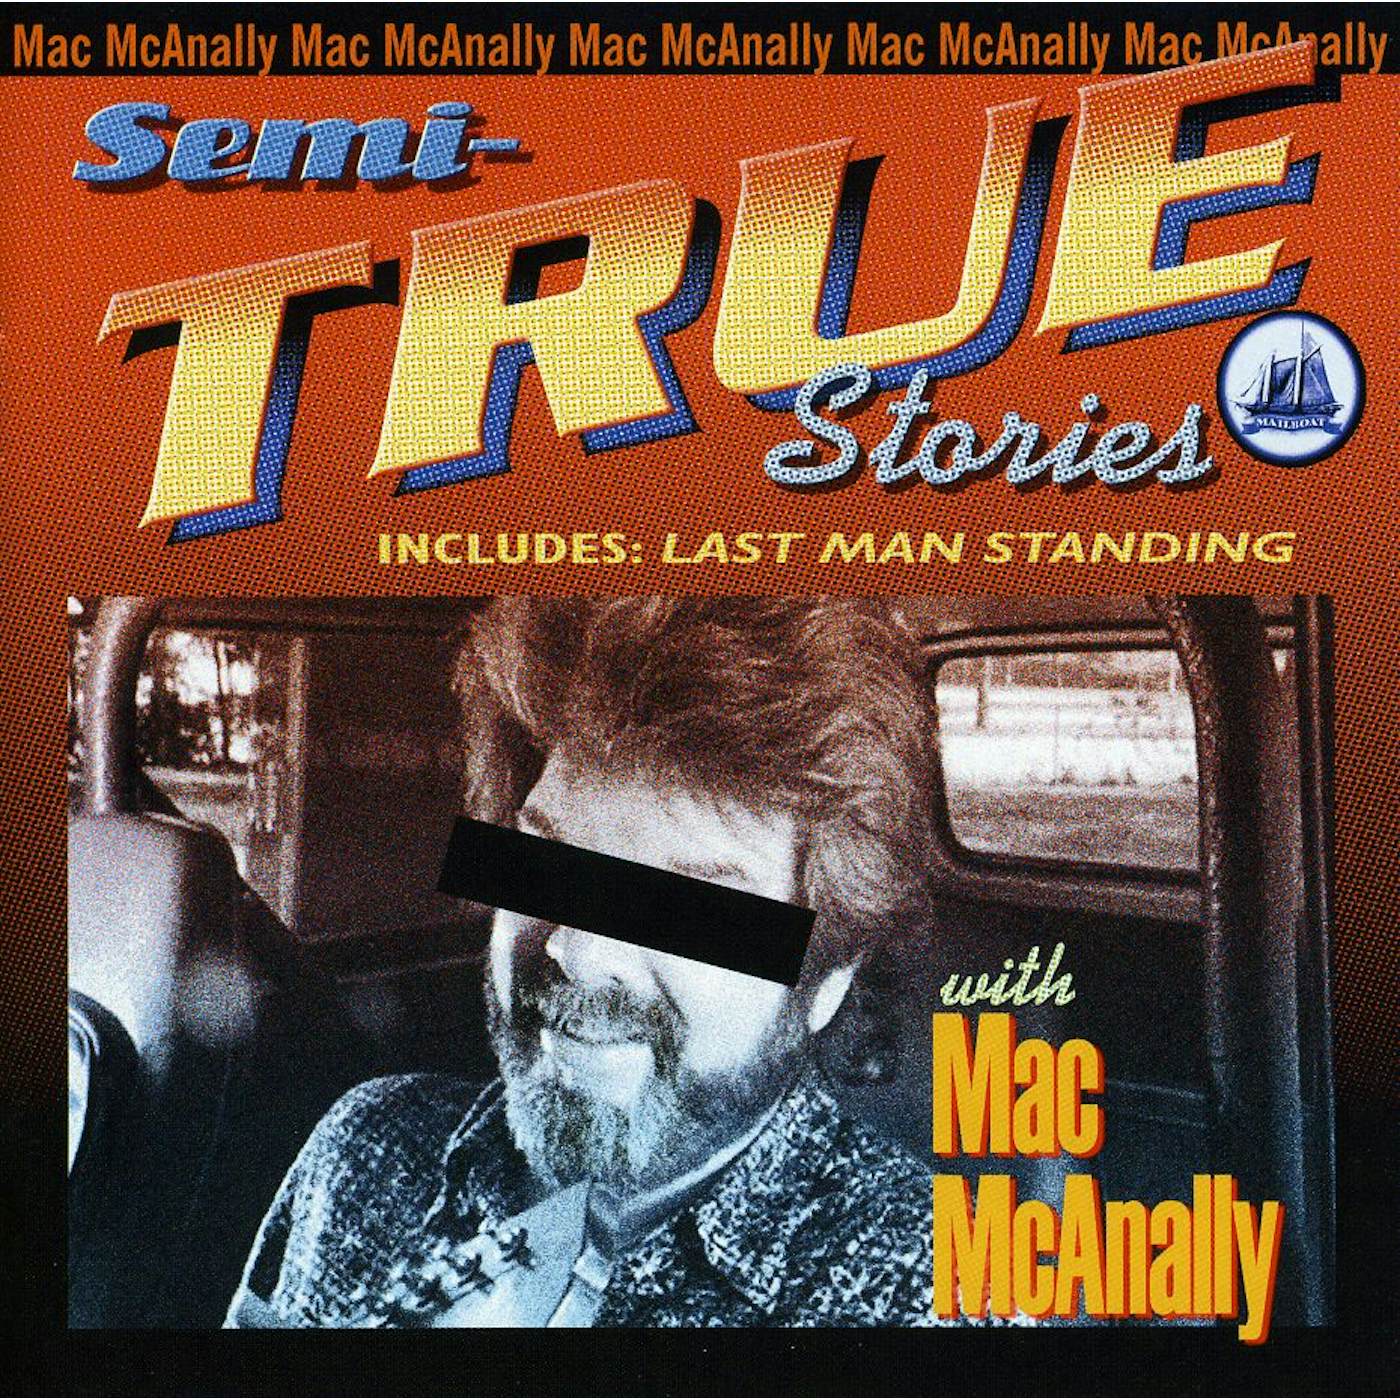 Mac McAnally SEMI-TRUE STORIES CD